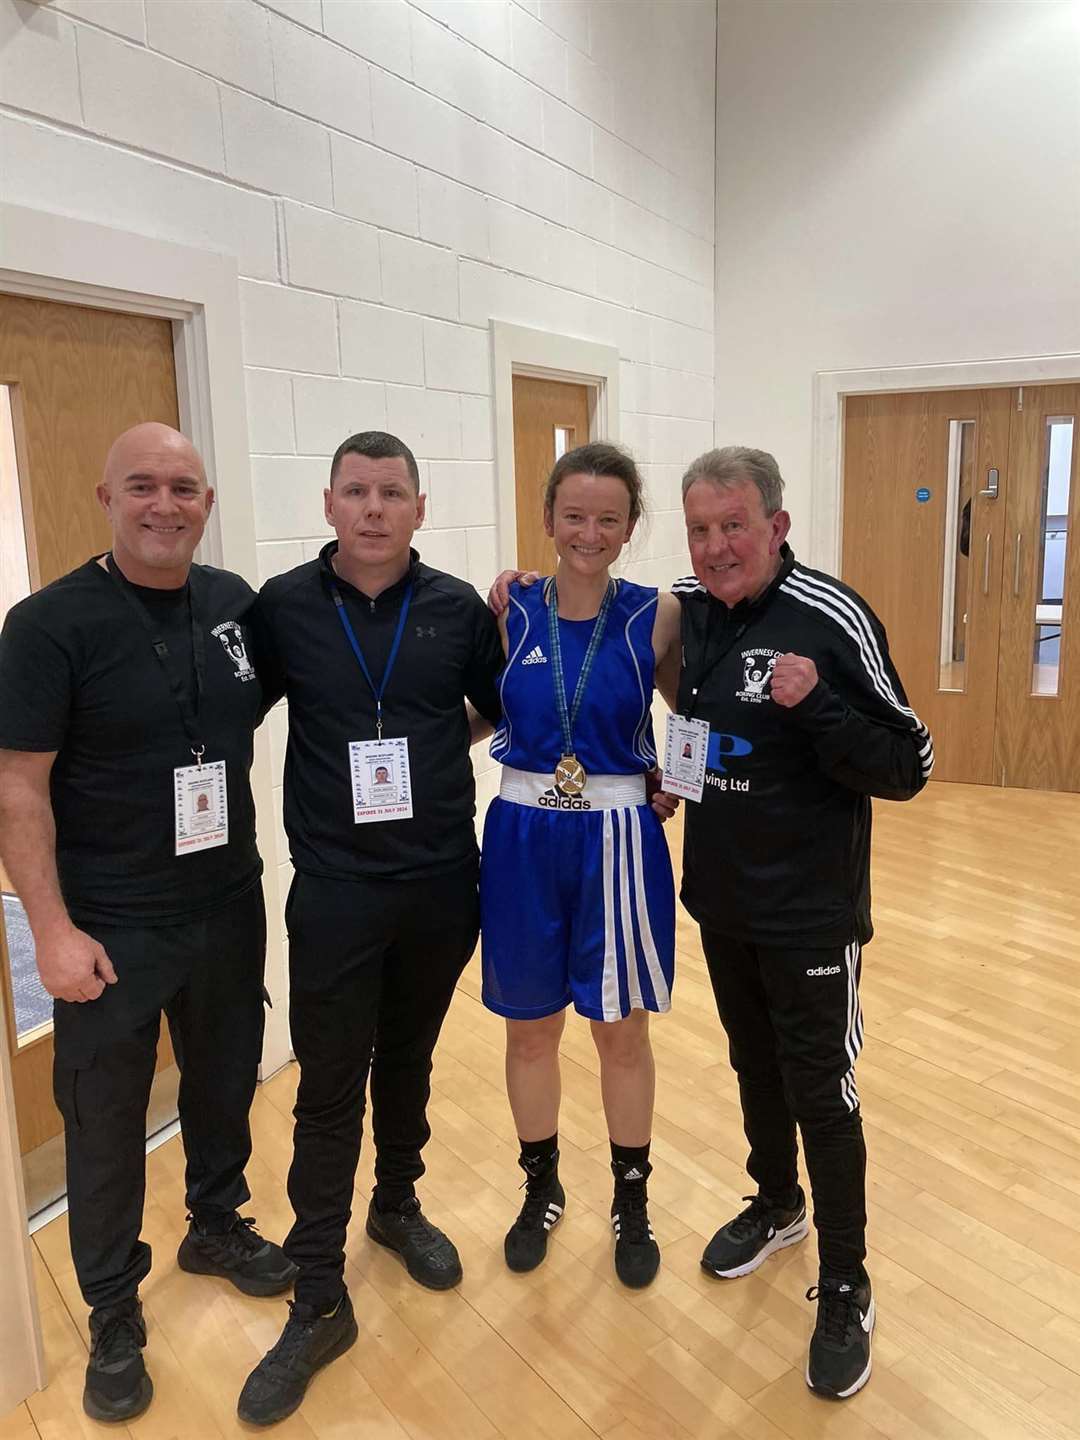 Inverness City Boxing Club's Mary MacGillivray won the Scottish Elite Development Championship title.